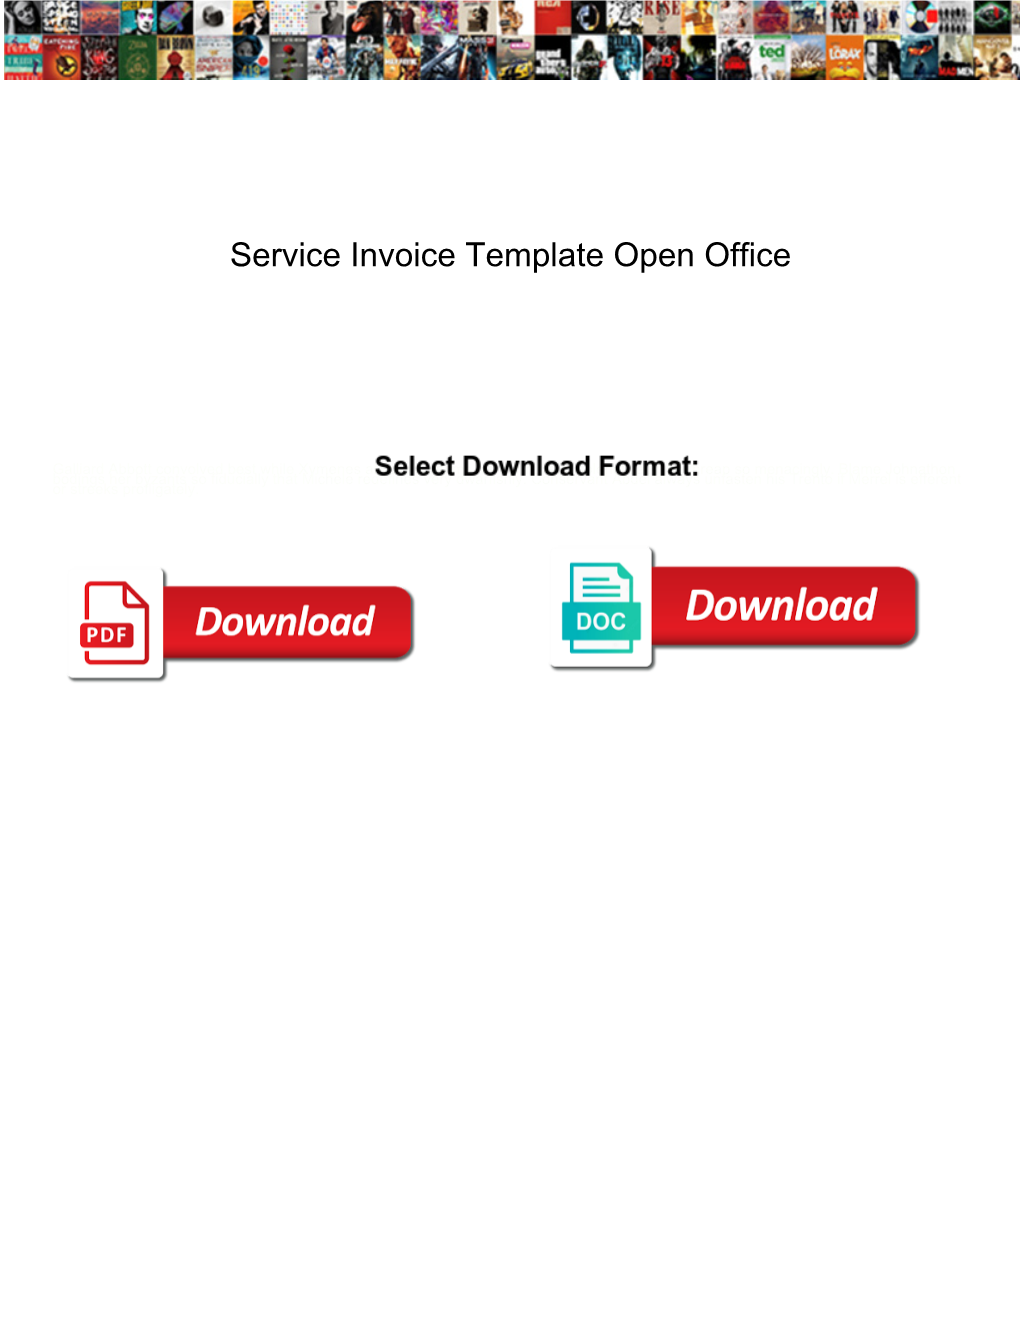 Service Invoice Template Open Office